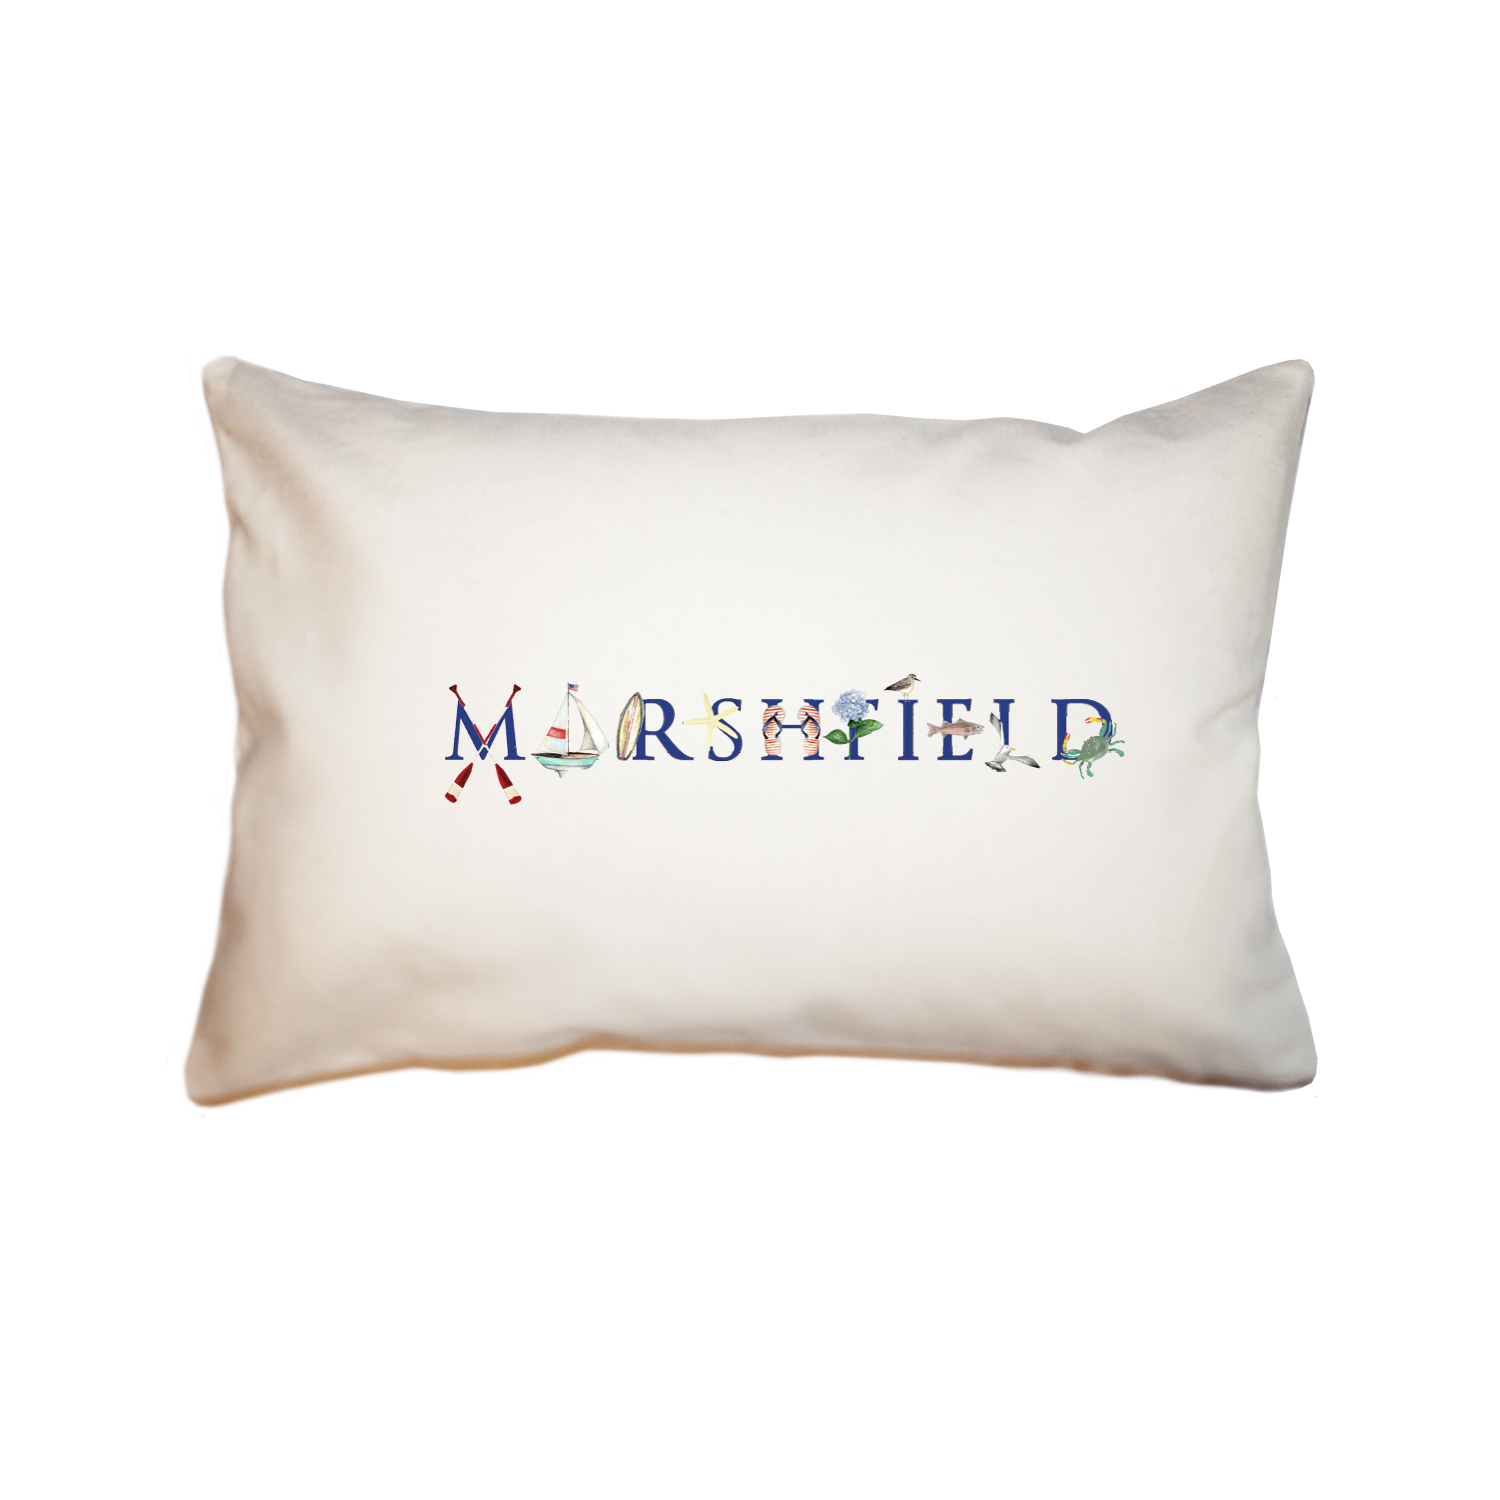 Marshfield large rectangle pillow